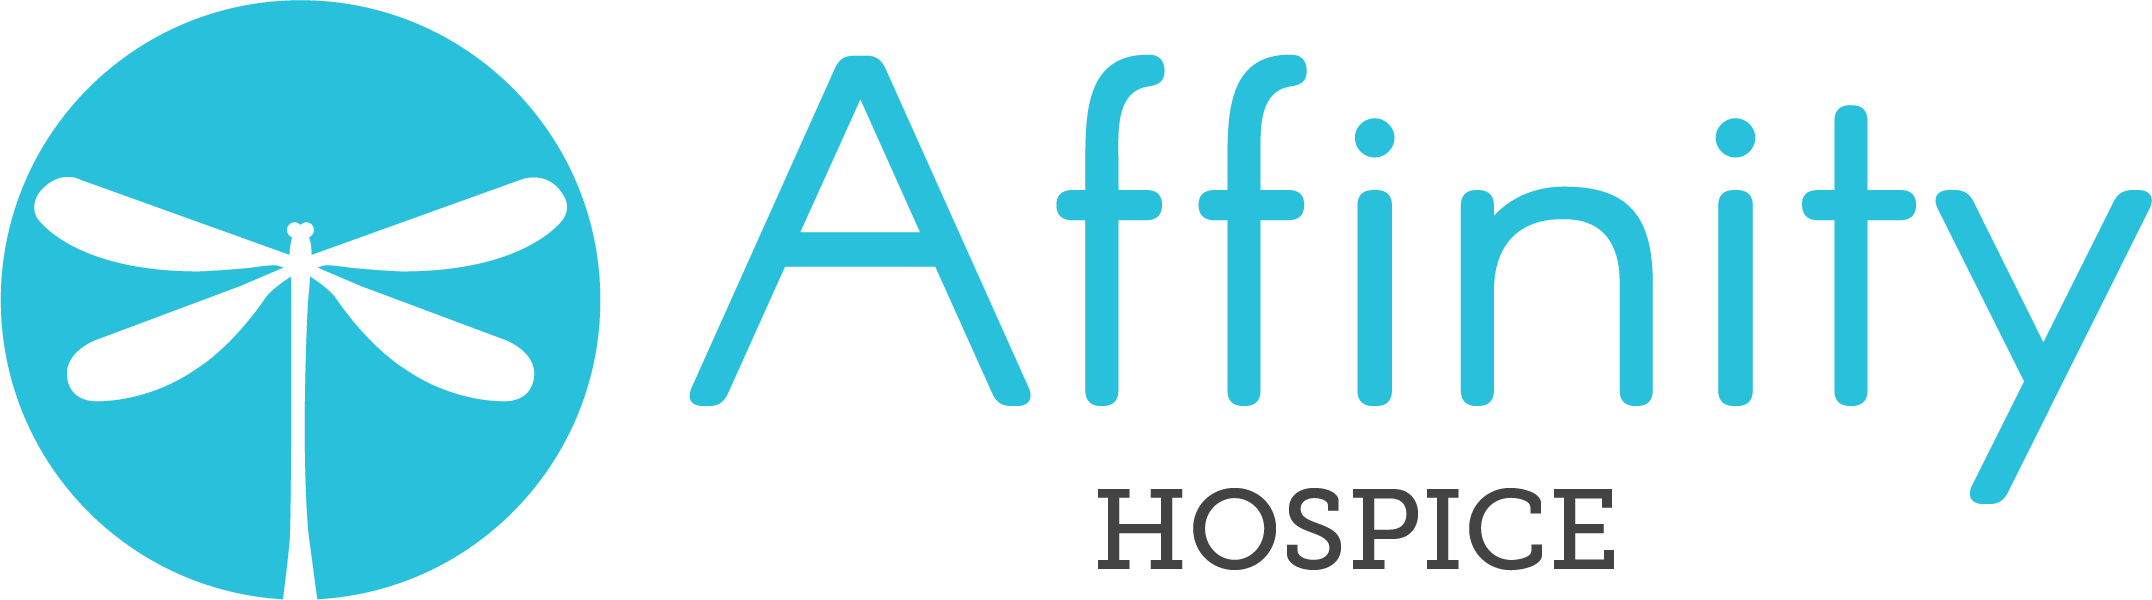 Affinity Hospice